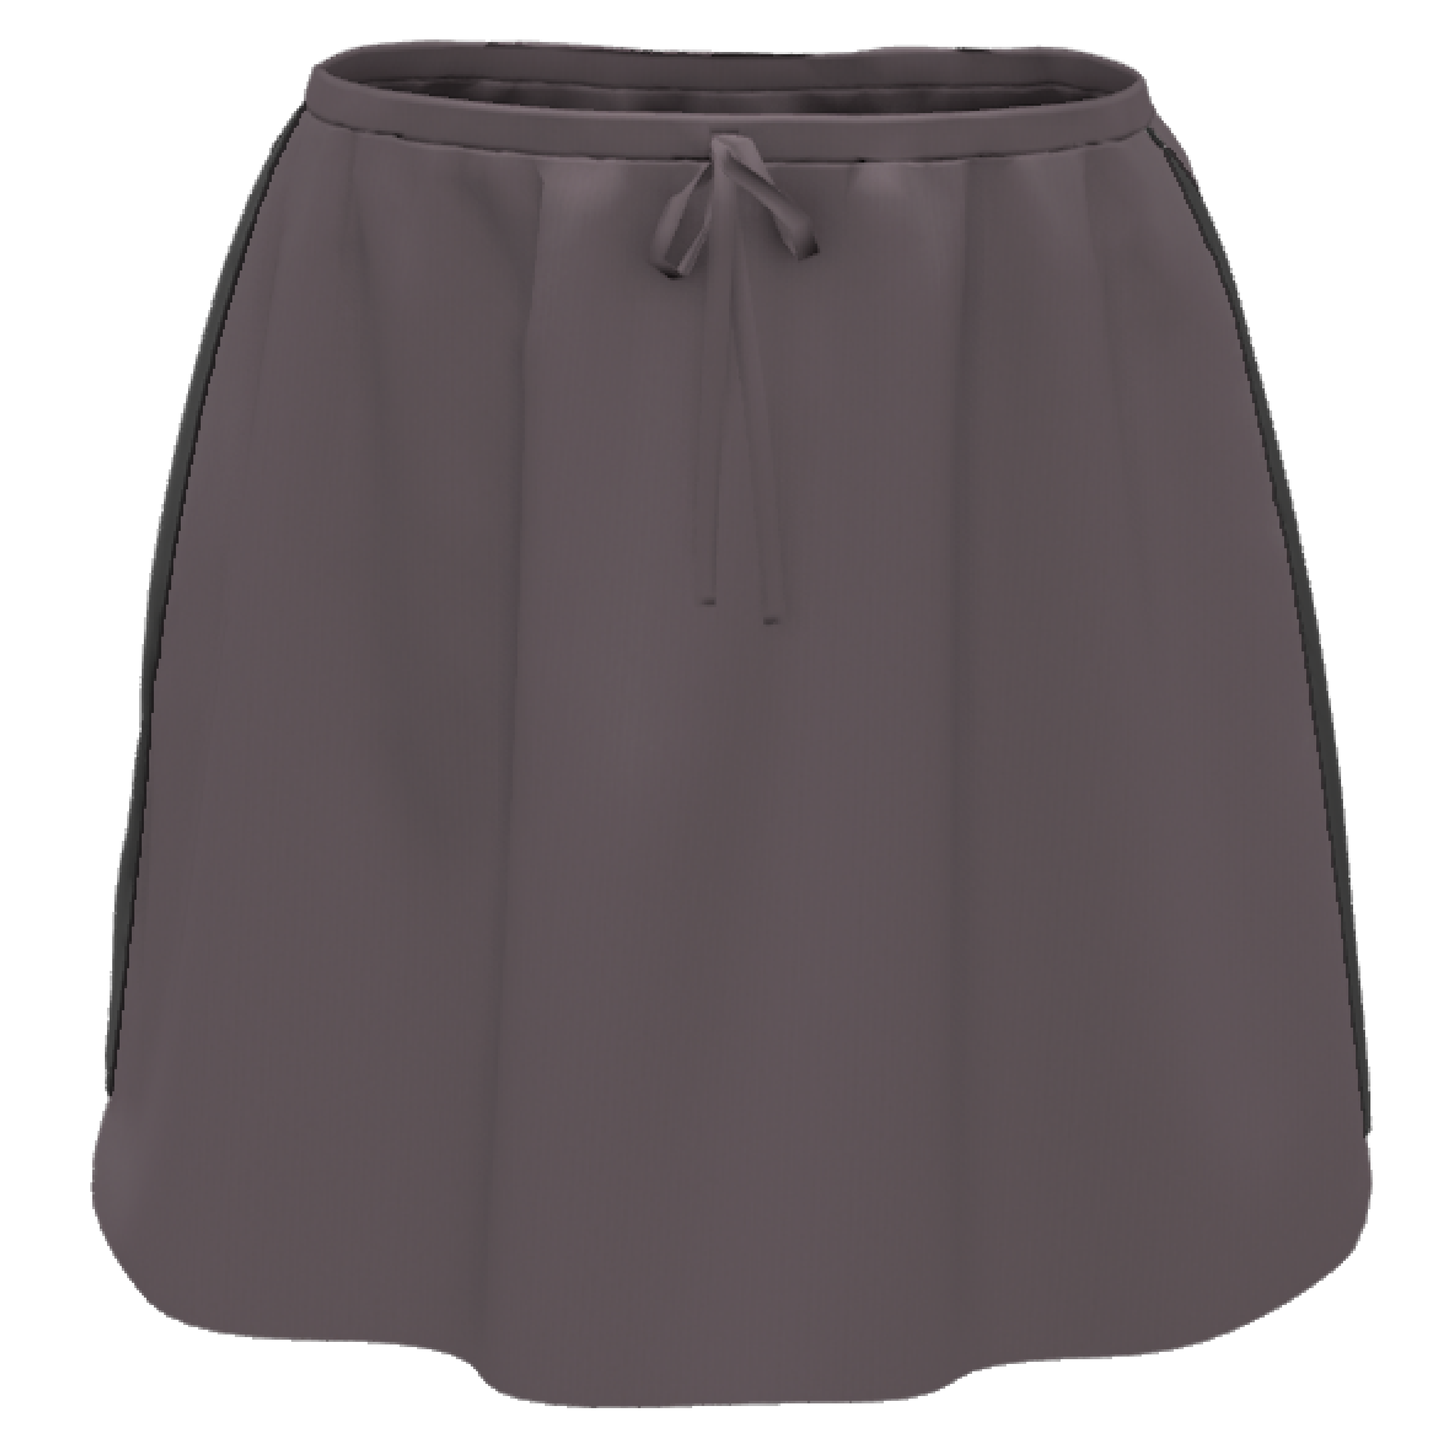 Taylor Pocket Skirt: Hazy Plum